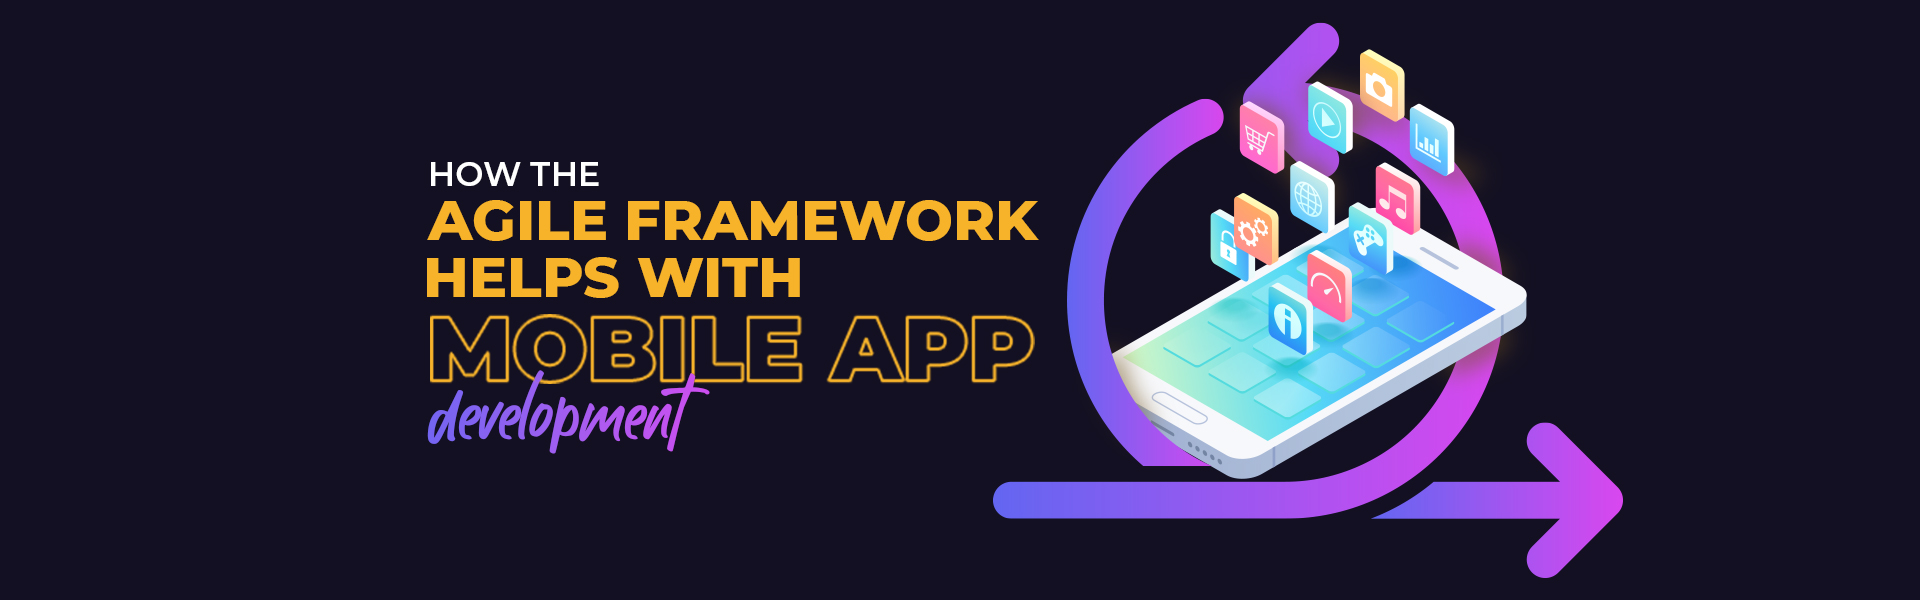 agile framework helps with mobile app development